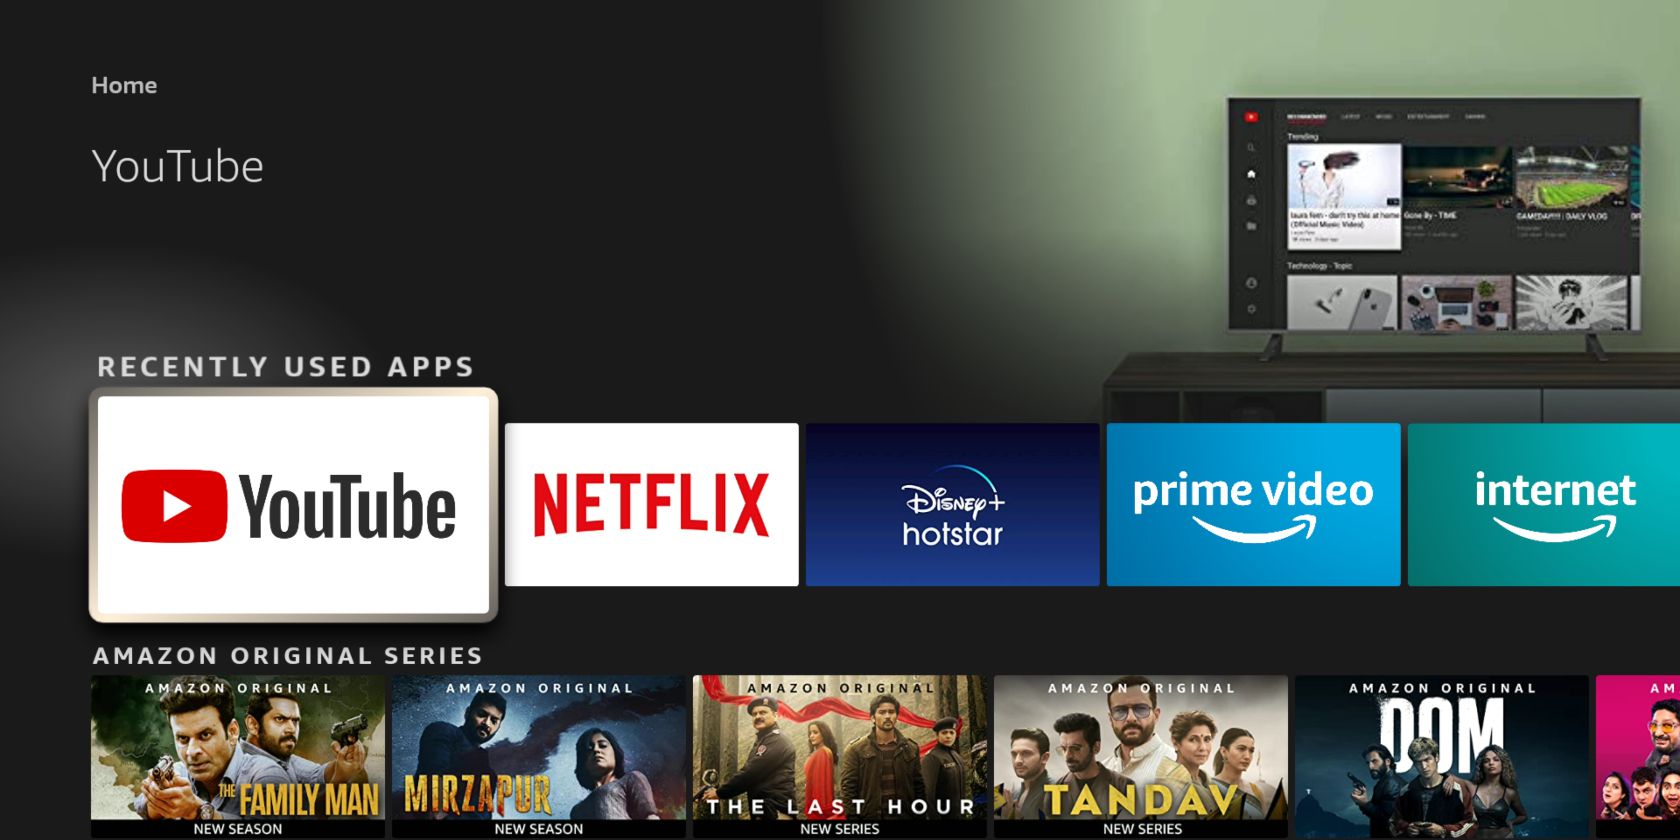 Amazon Fire TV home screen